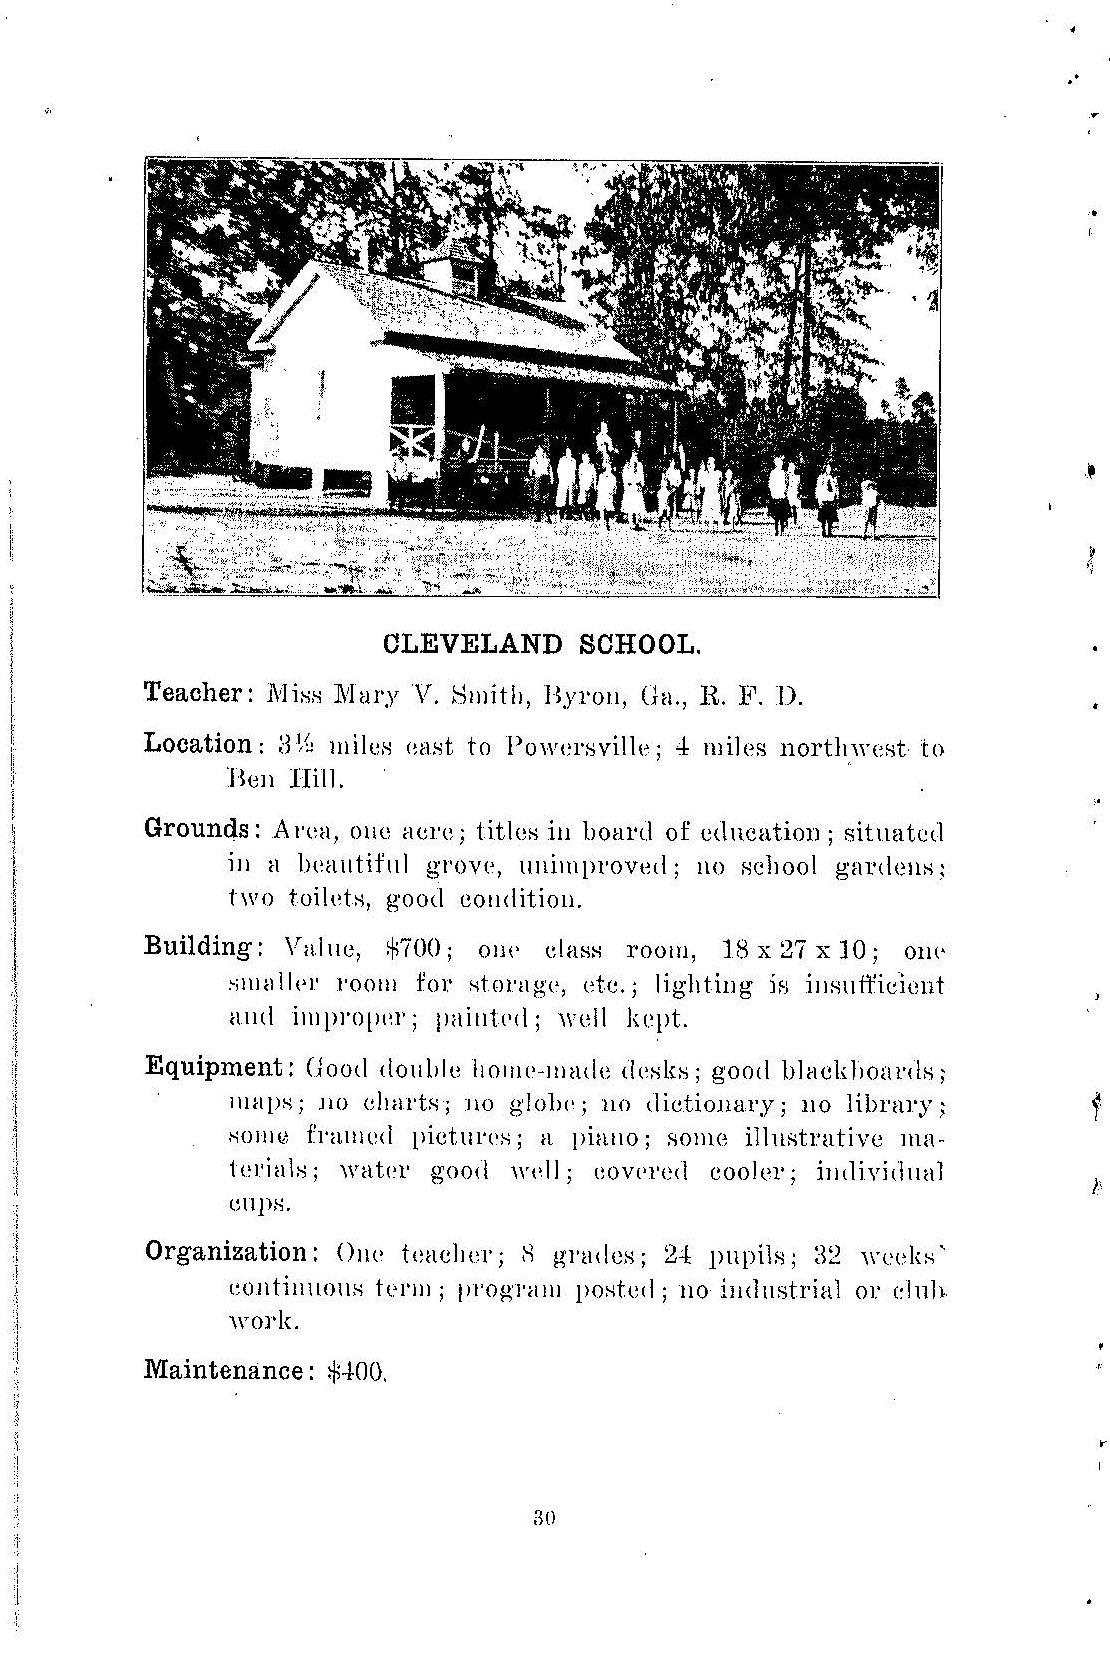 Cleveland School